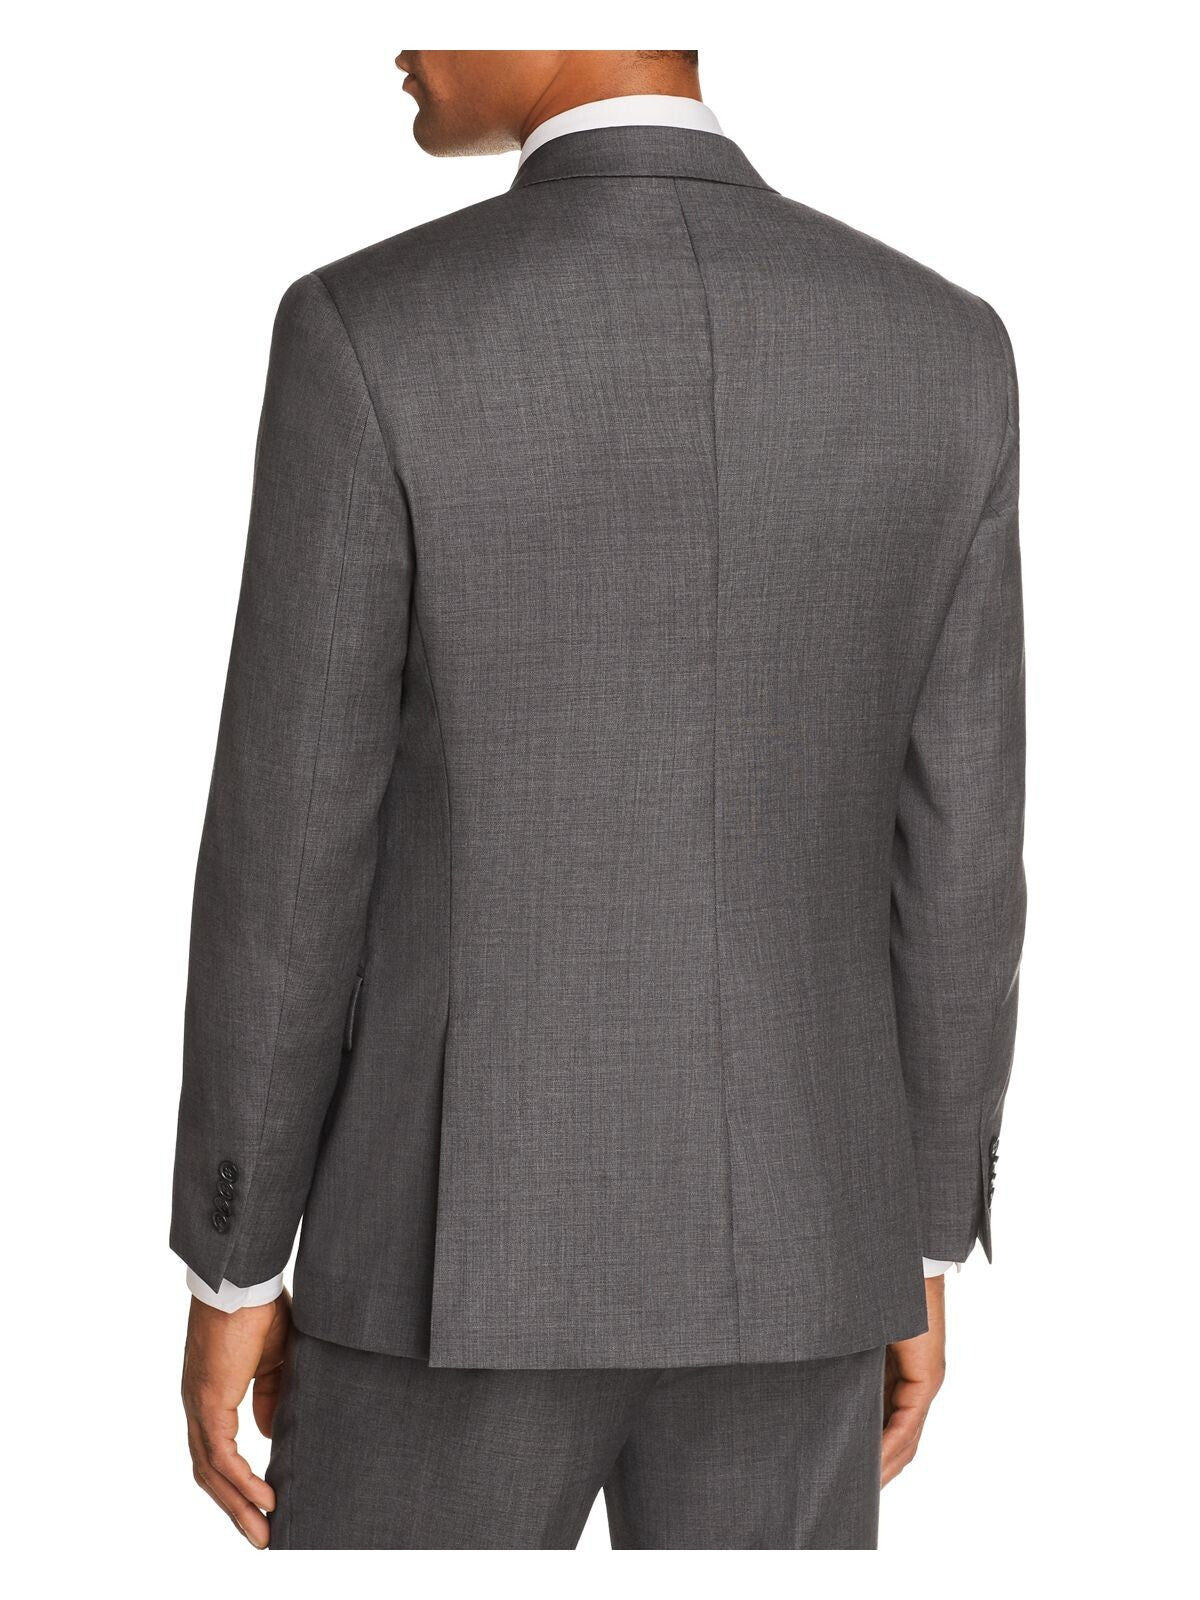 MICHAEL KORS Mens Sharkskin Gray Single Breasted, Classic Fit Wool Blend Blazer 36